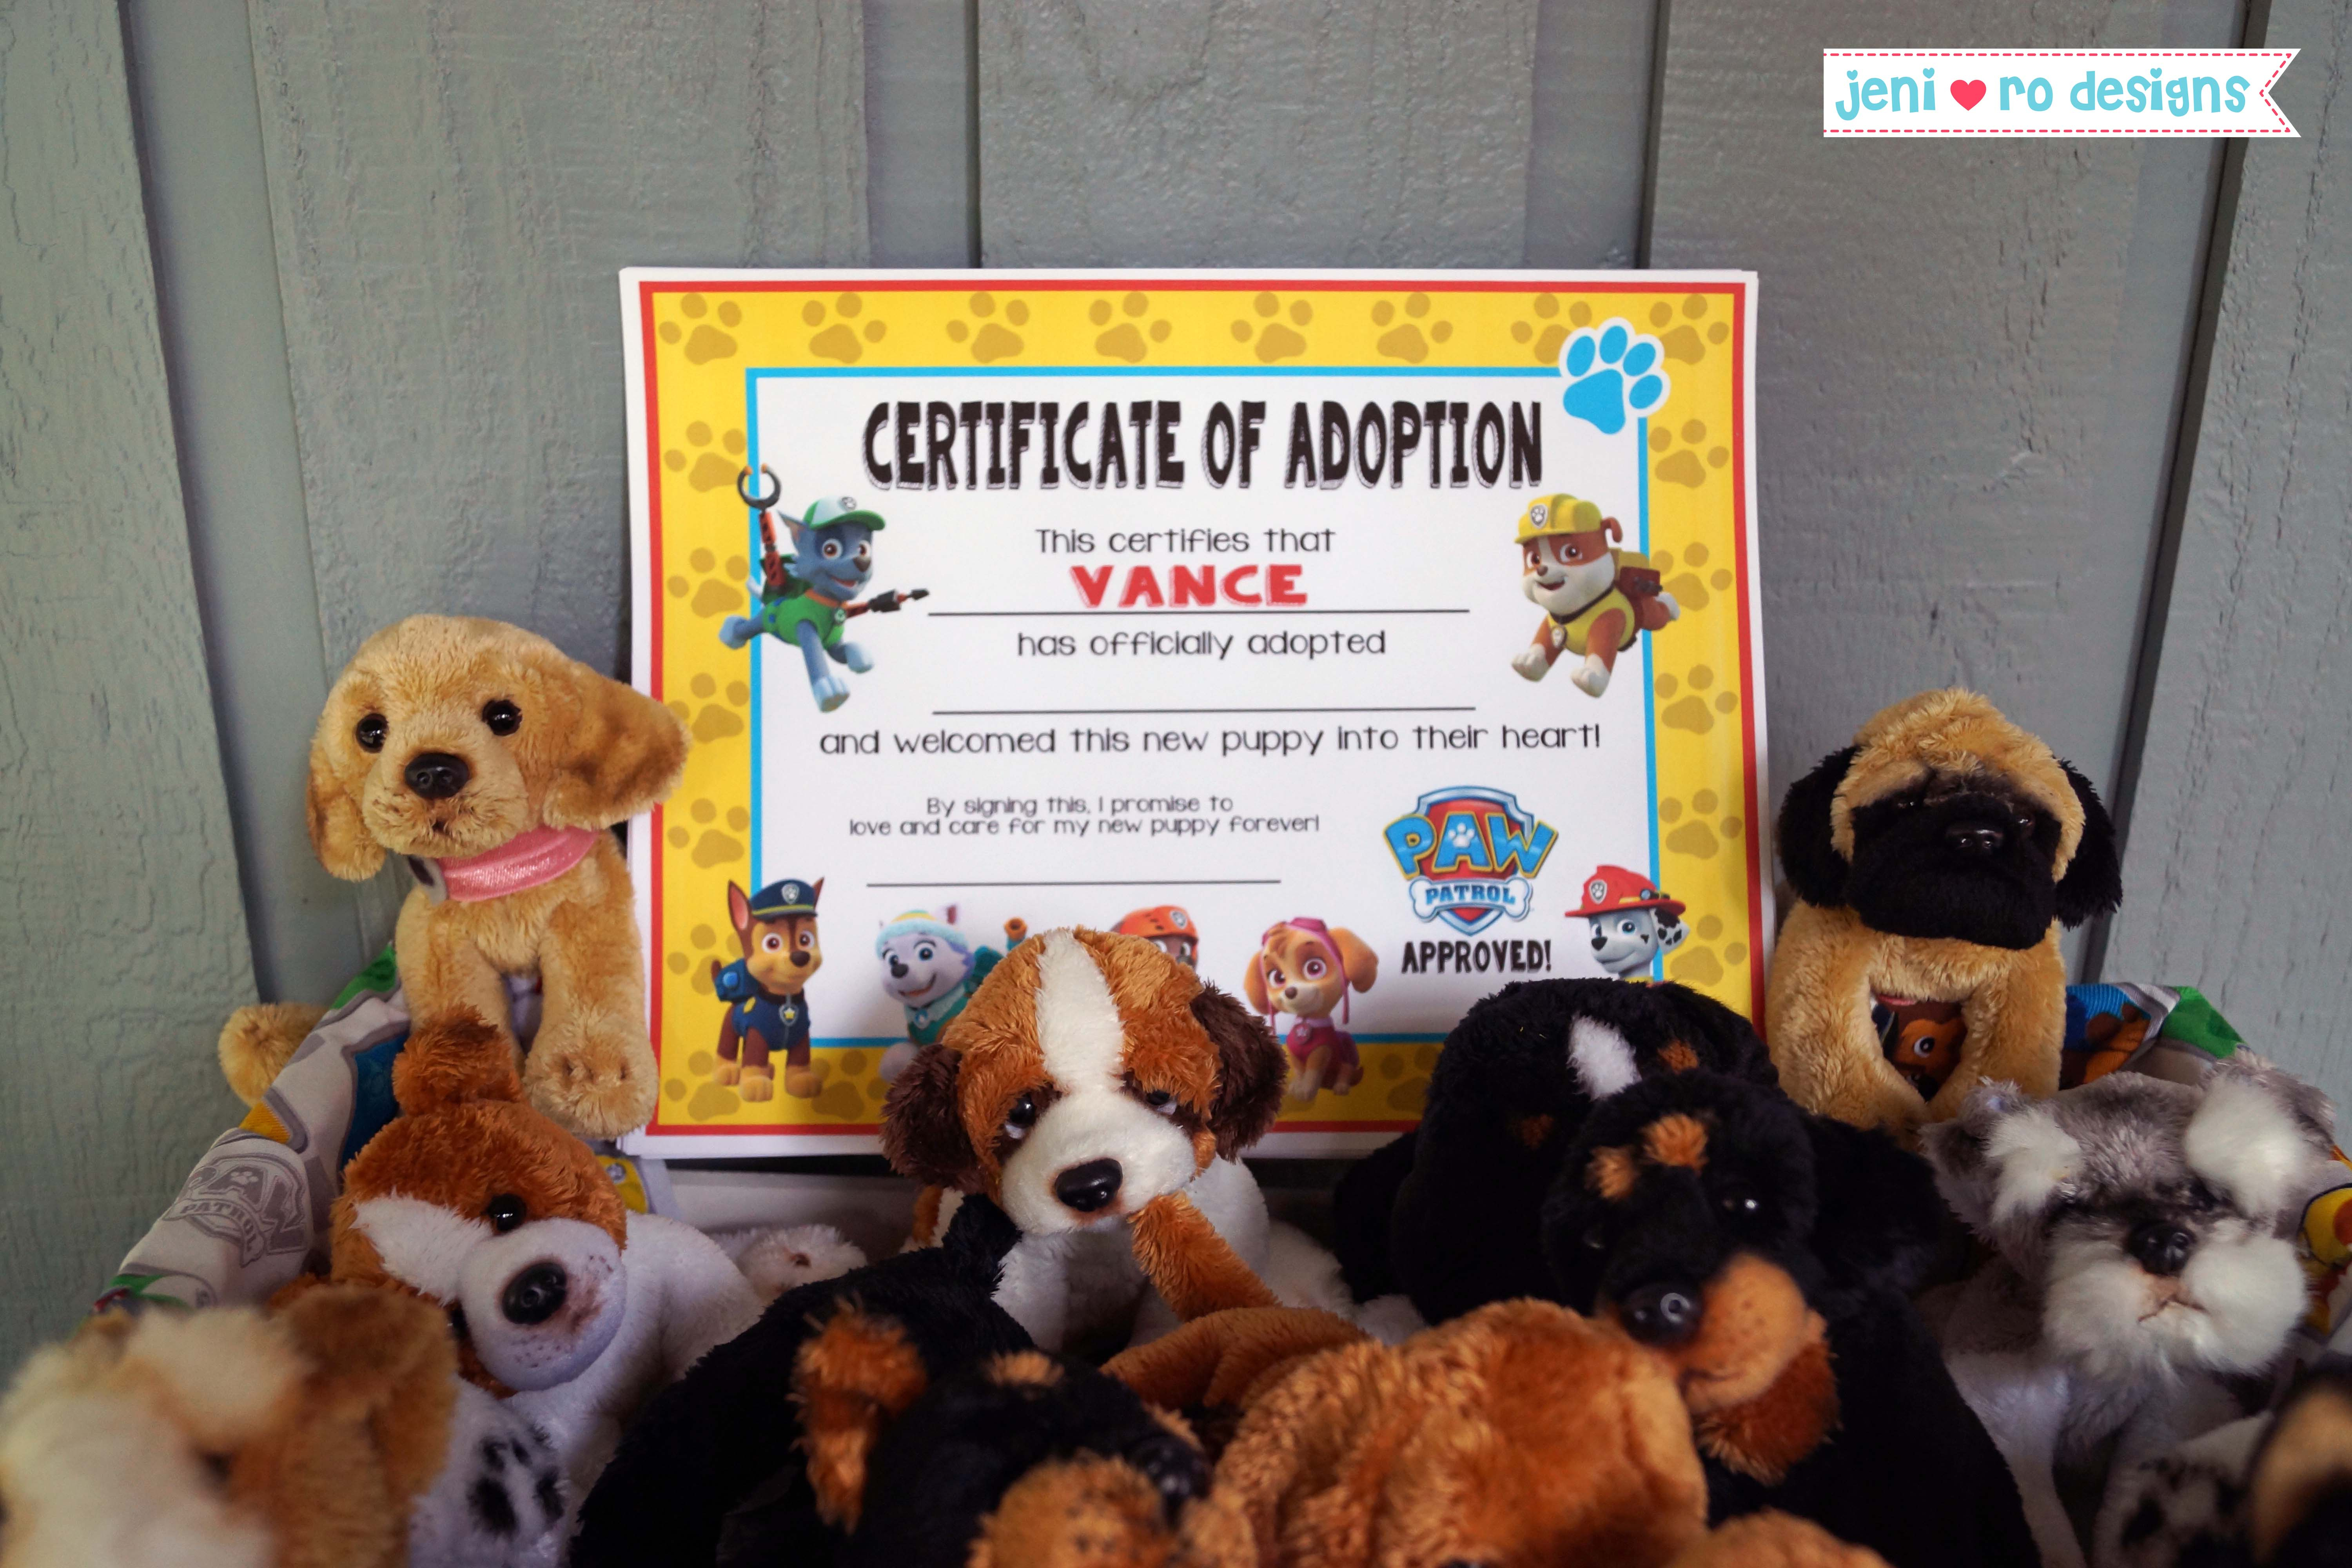 Mr. V's Paw Patrol 4Th Birthday Party - The Fun! • - Free Printable Stuffed Animal Adoption Certificate